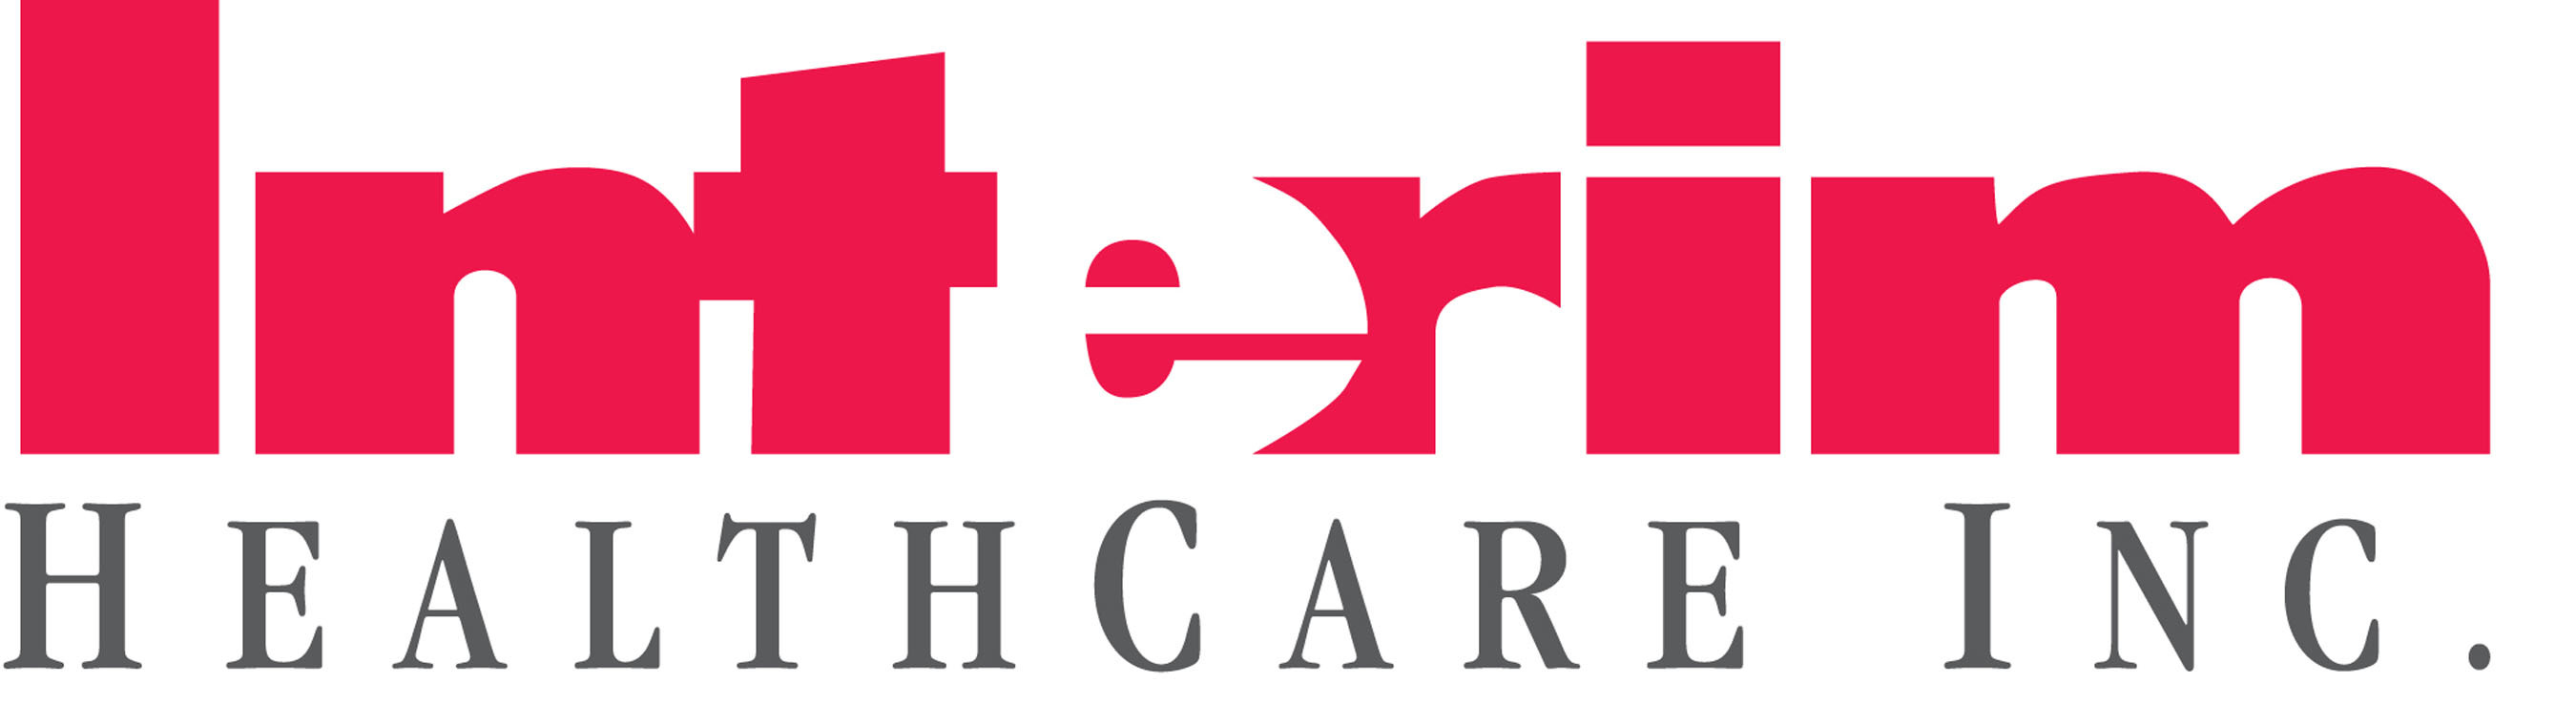 Interim HealthCare logo.